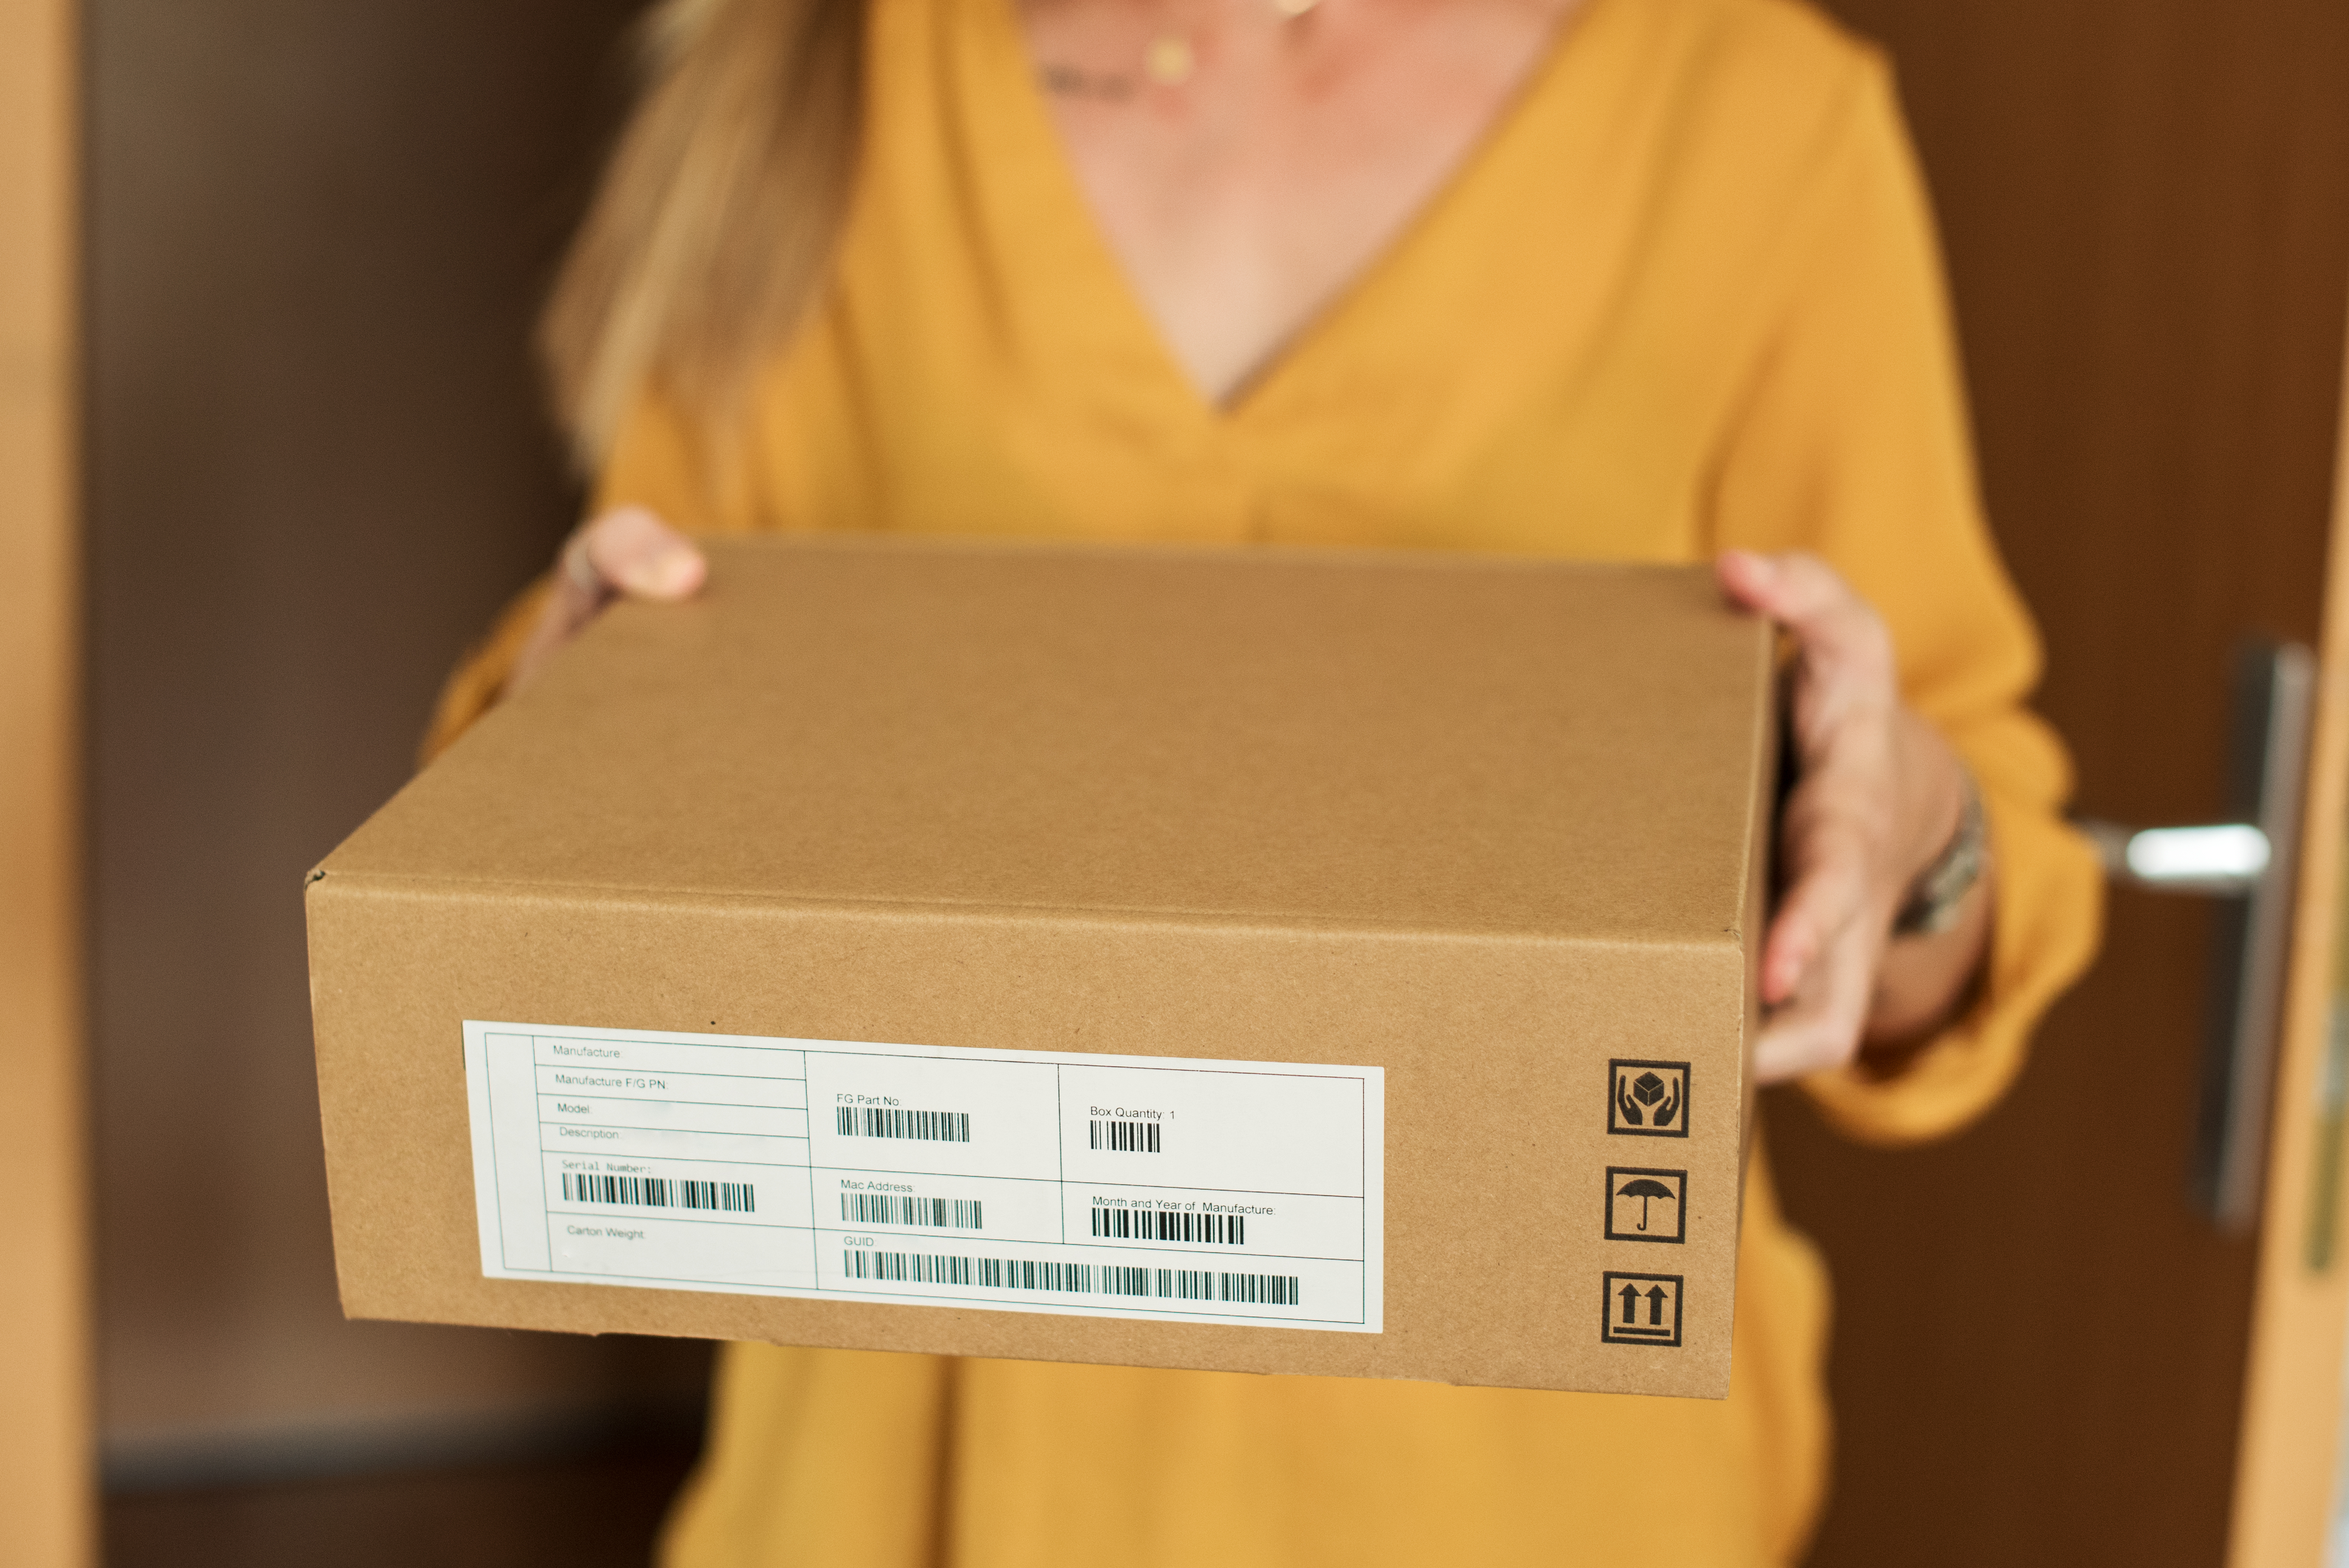 A woman receives a parcel | Source: Getty Images